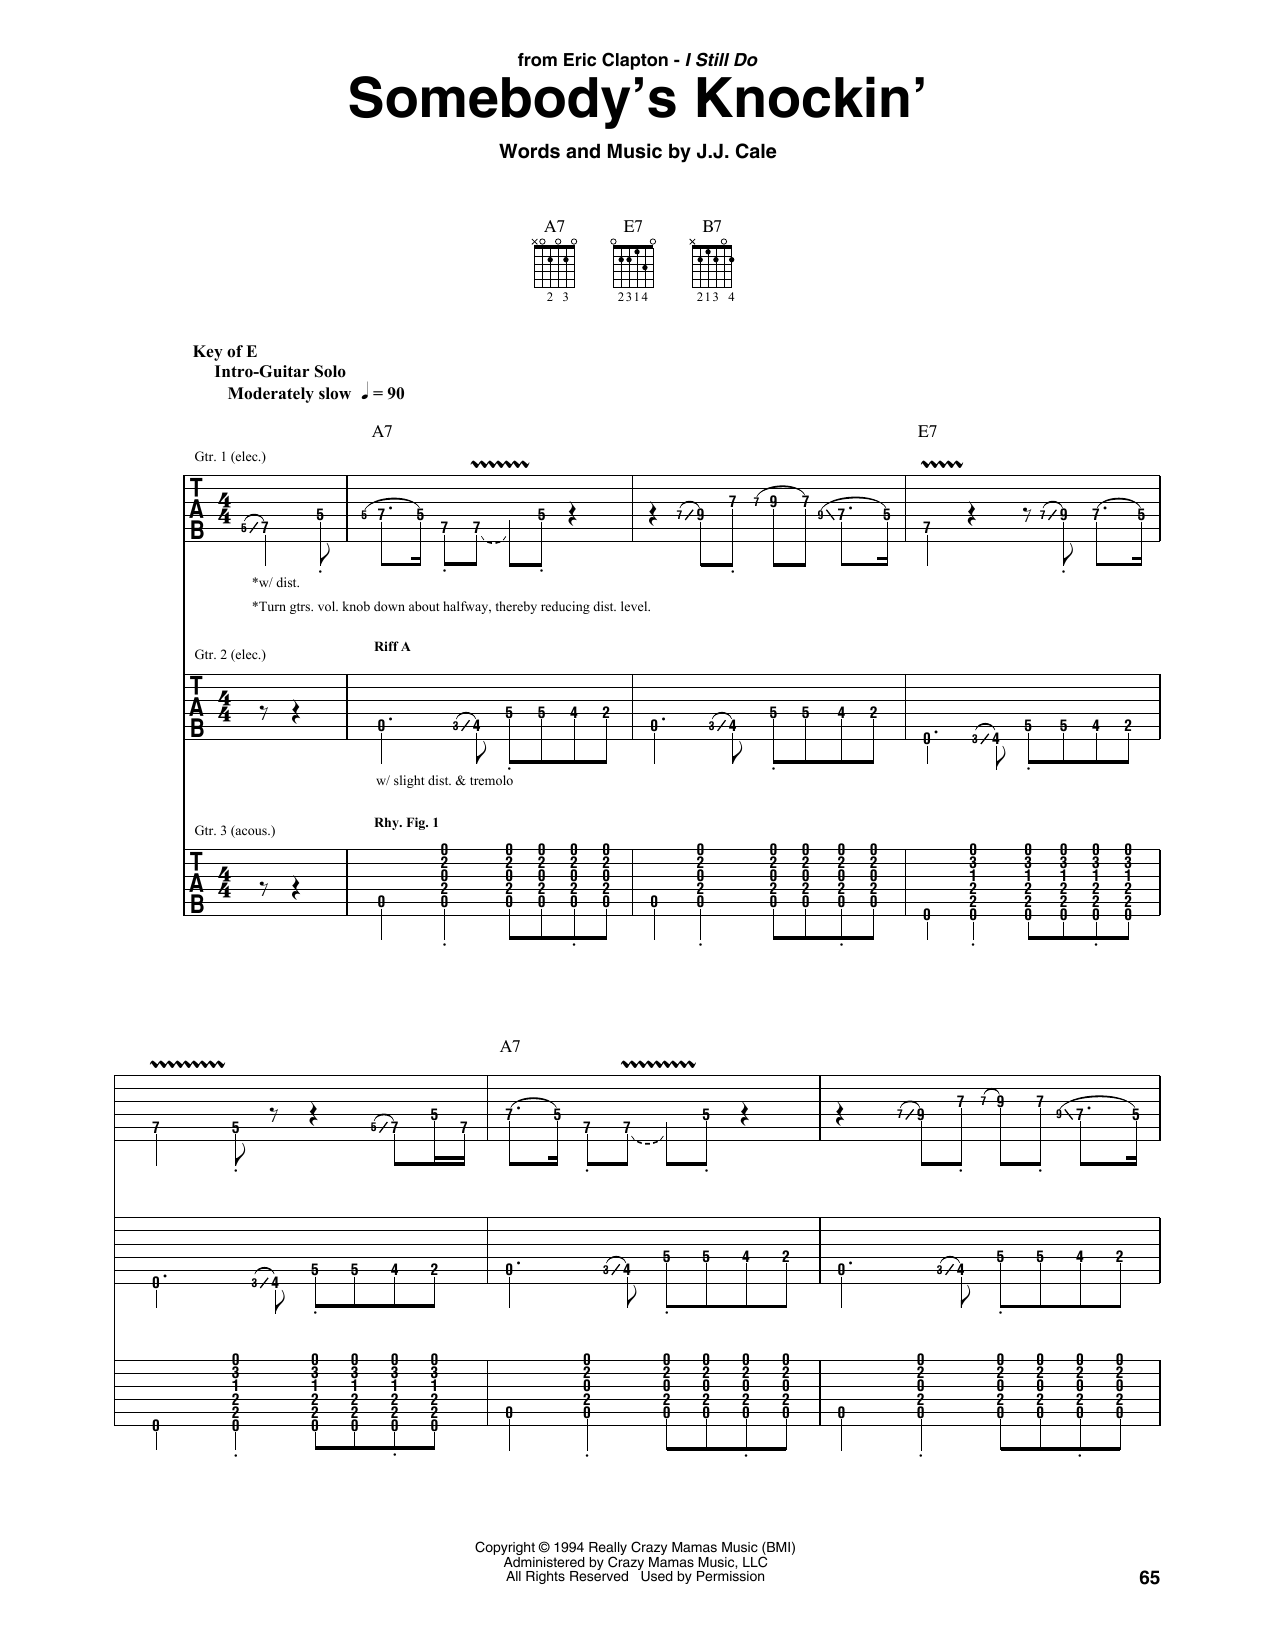 Eric Clapton Somebody's Knockin' Sheet Music Notes & Chords for Guitar Rhythm Tab - Download or Print PDF